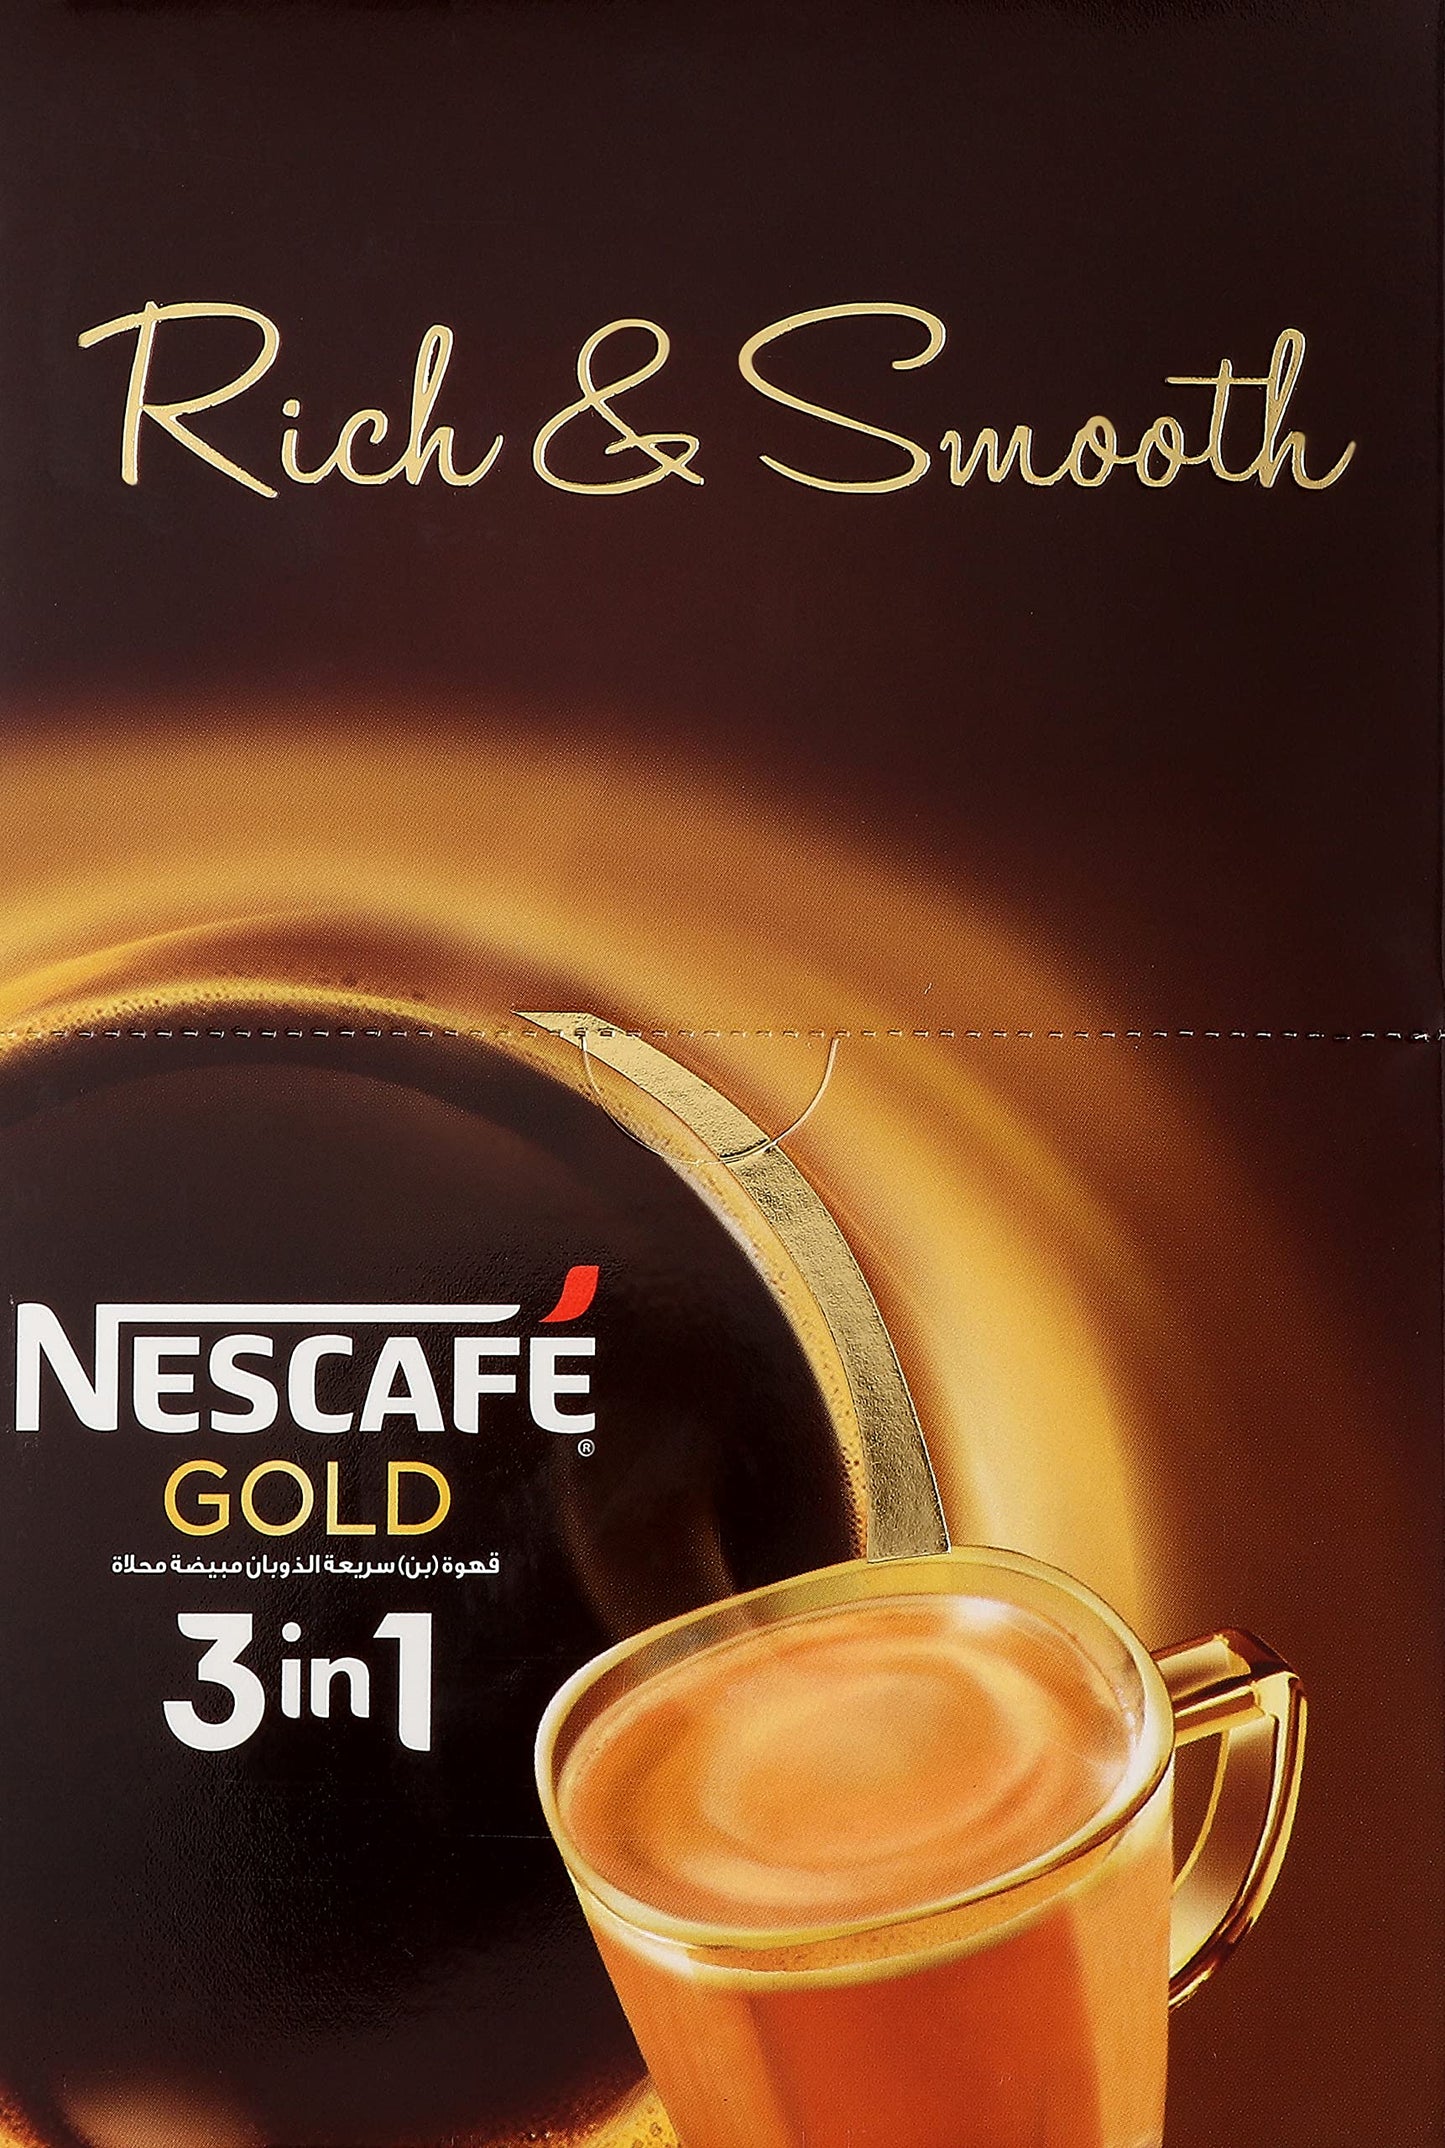 Nescafe 3in1 GOLD